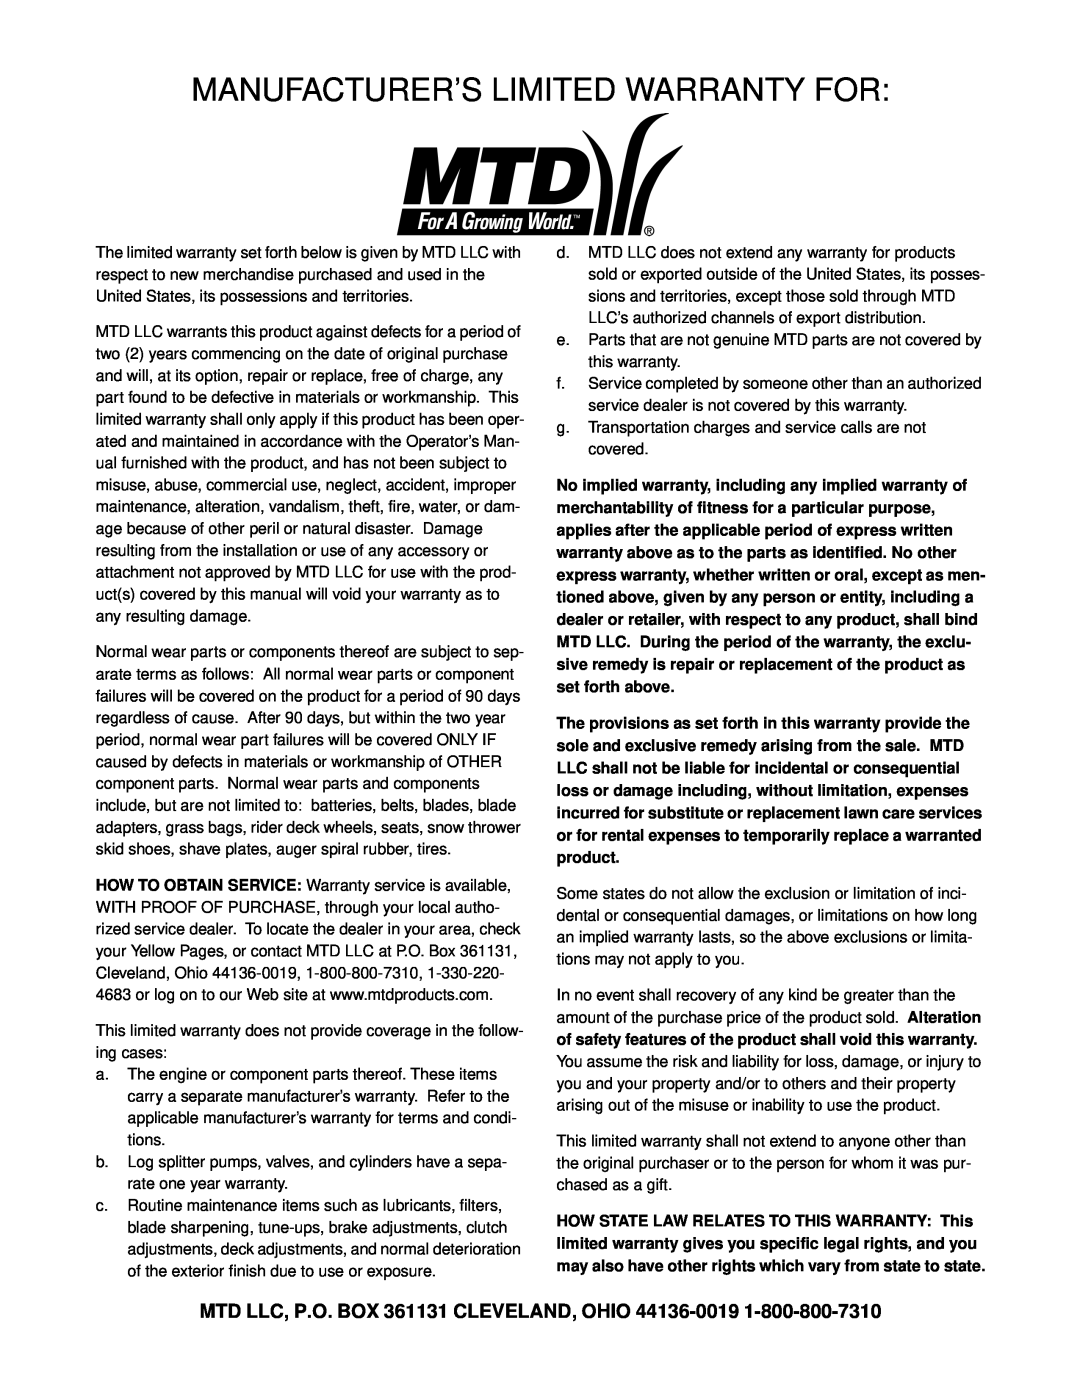 MTD 340 Thru 390 manual Manufacturer’S Limited Warranty For 